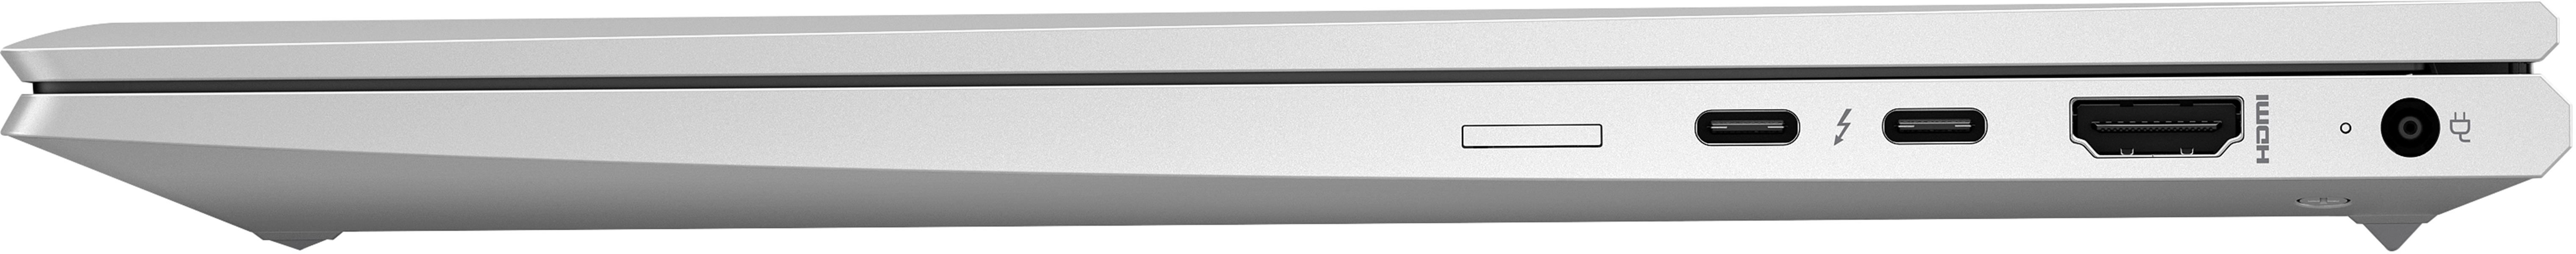 EliteBook 840 G8 - i5 1135G7 - 8GB RAM - 256GB SSD - 14inch - Win 10 Pro - QWERTY